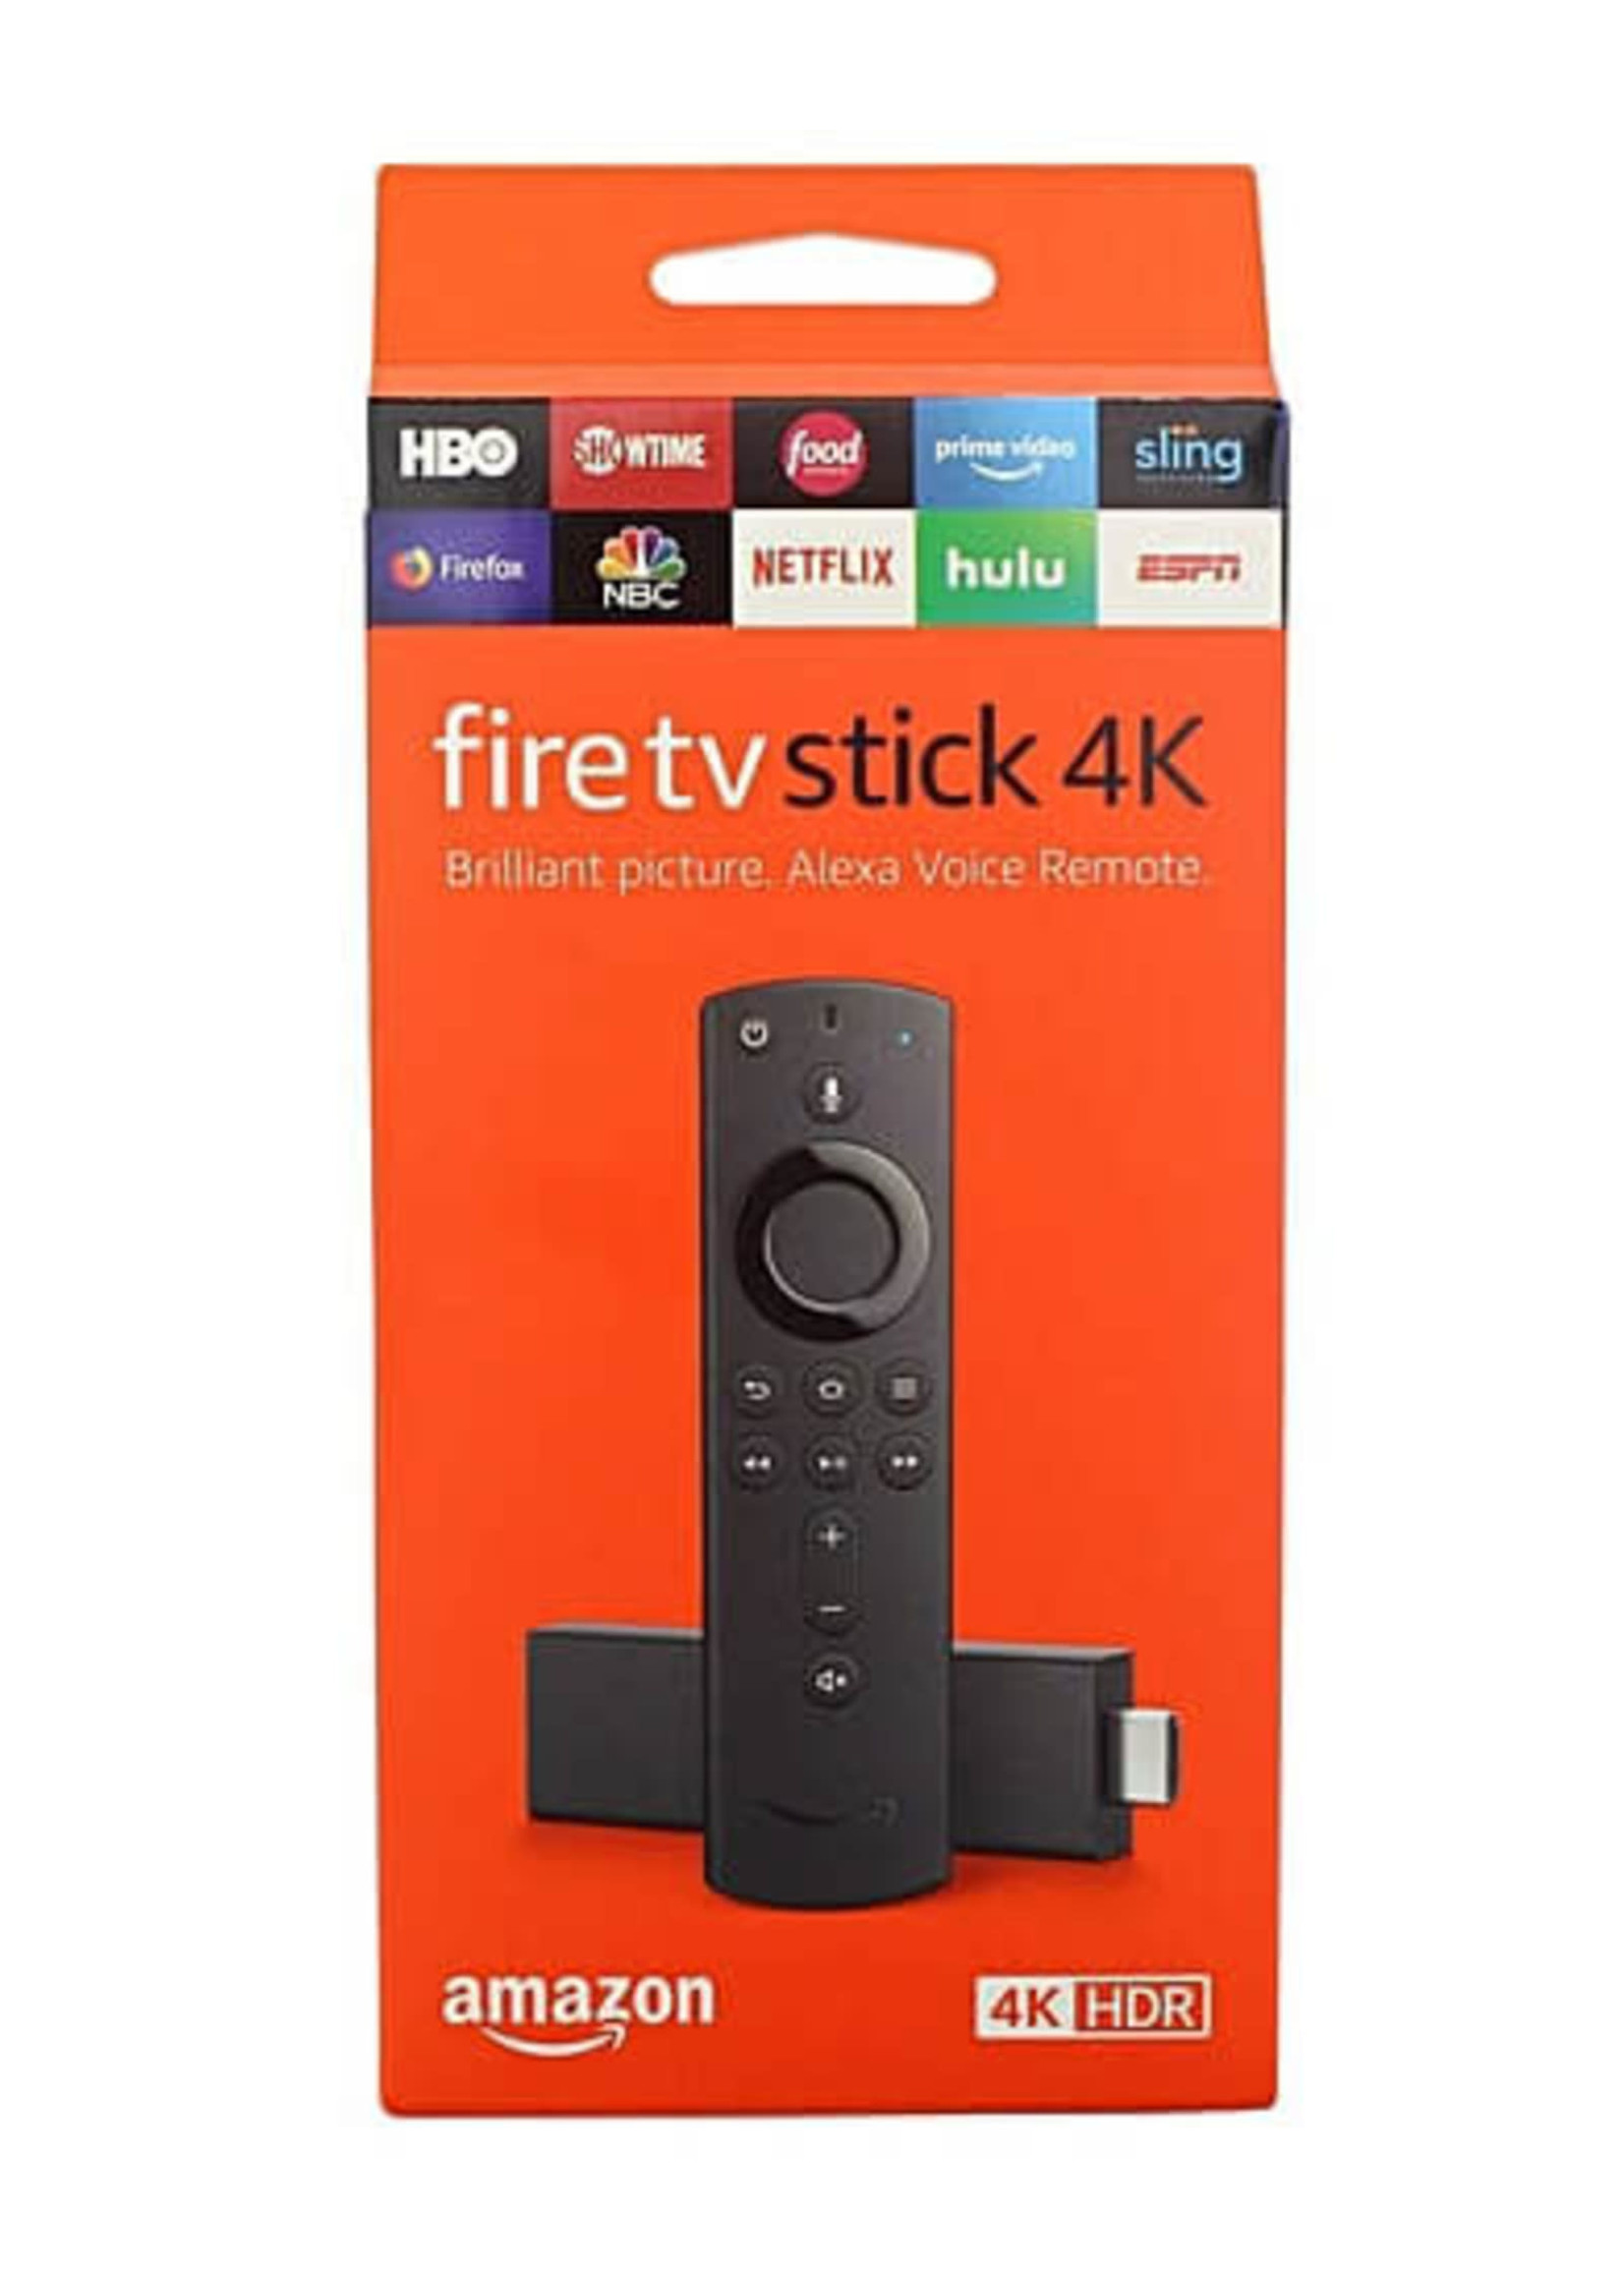 Amazon FIRE TV STICK 4K HDR